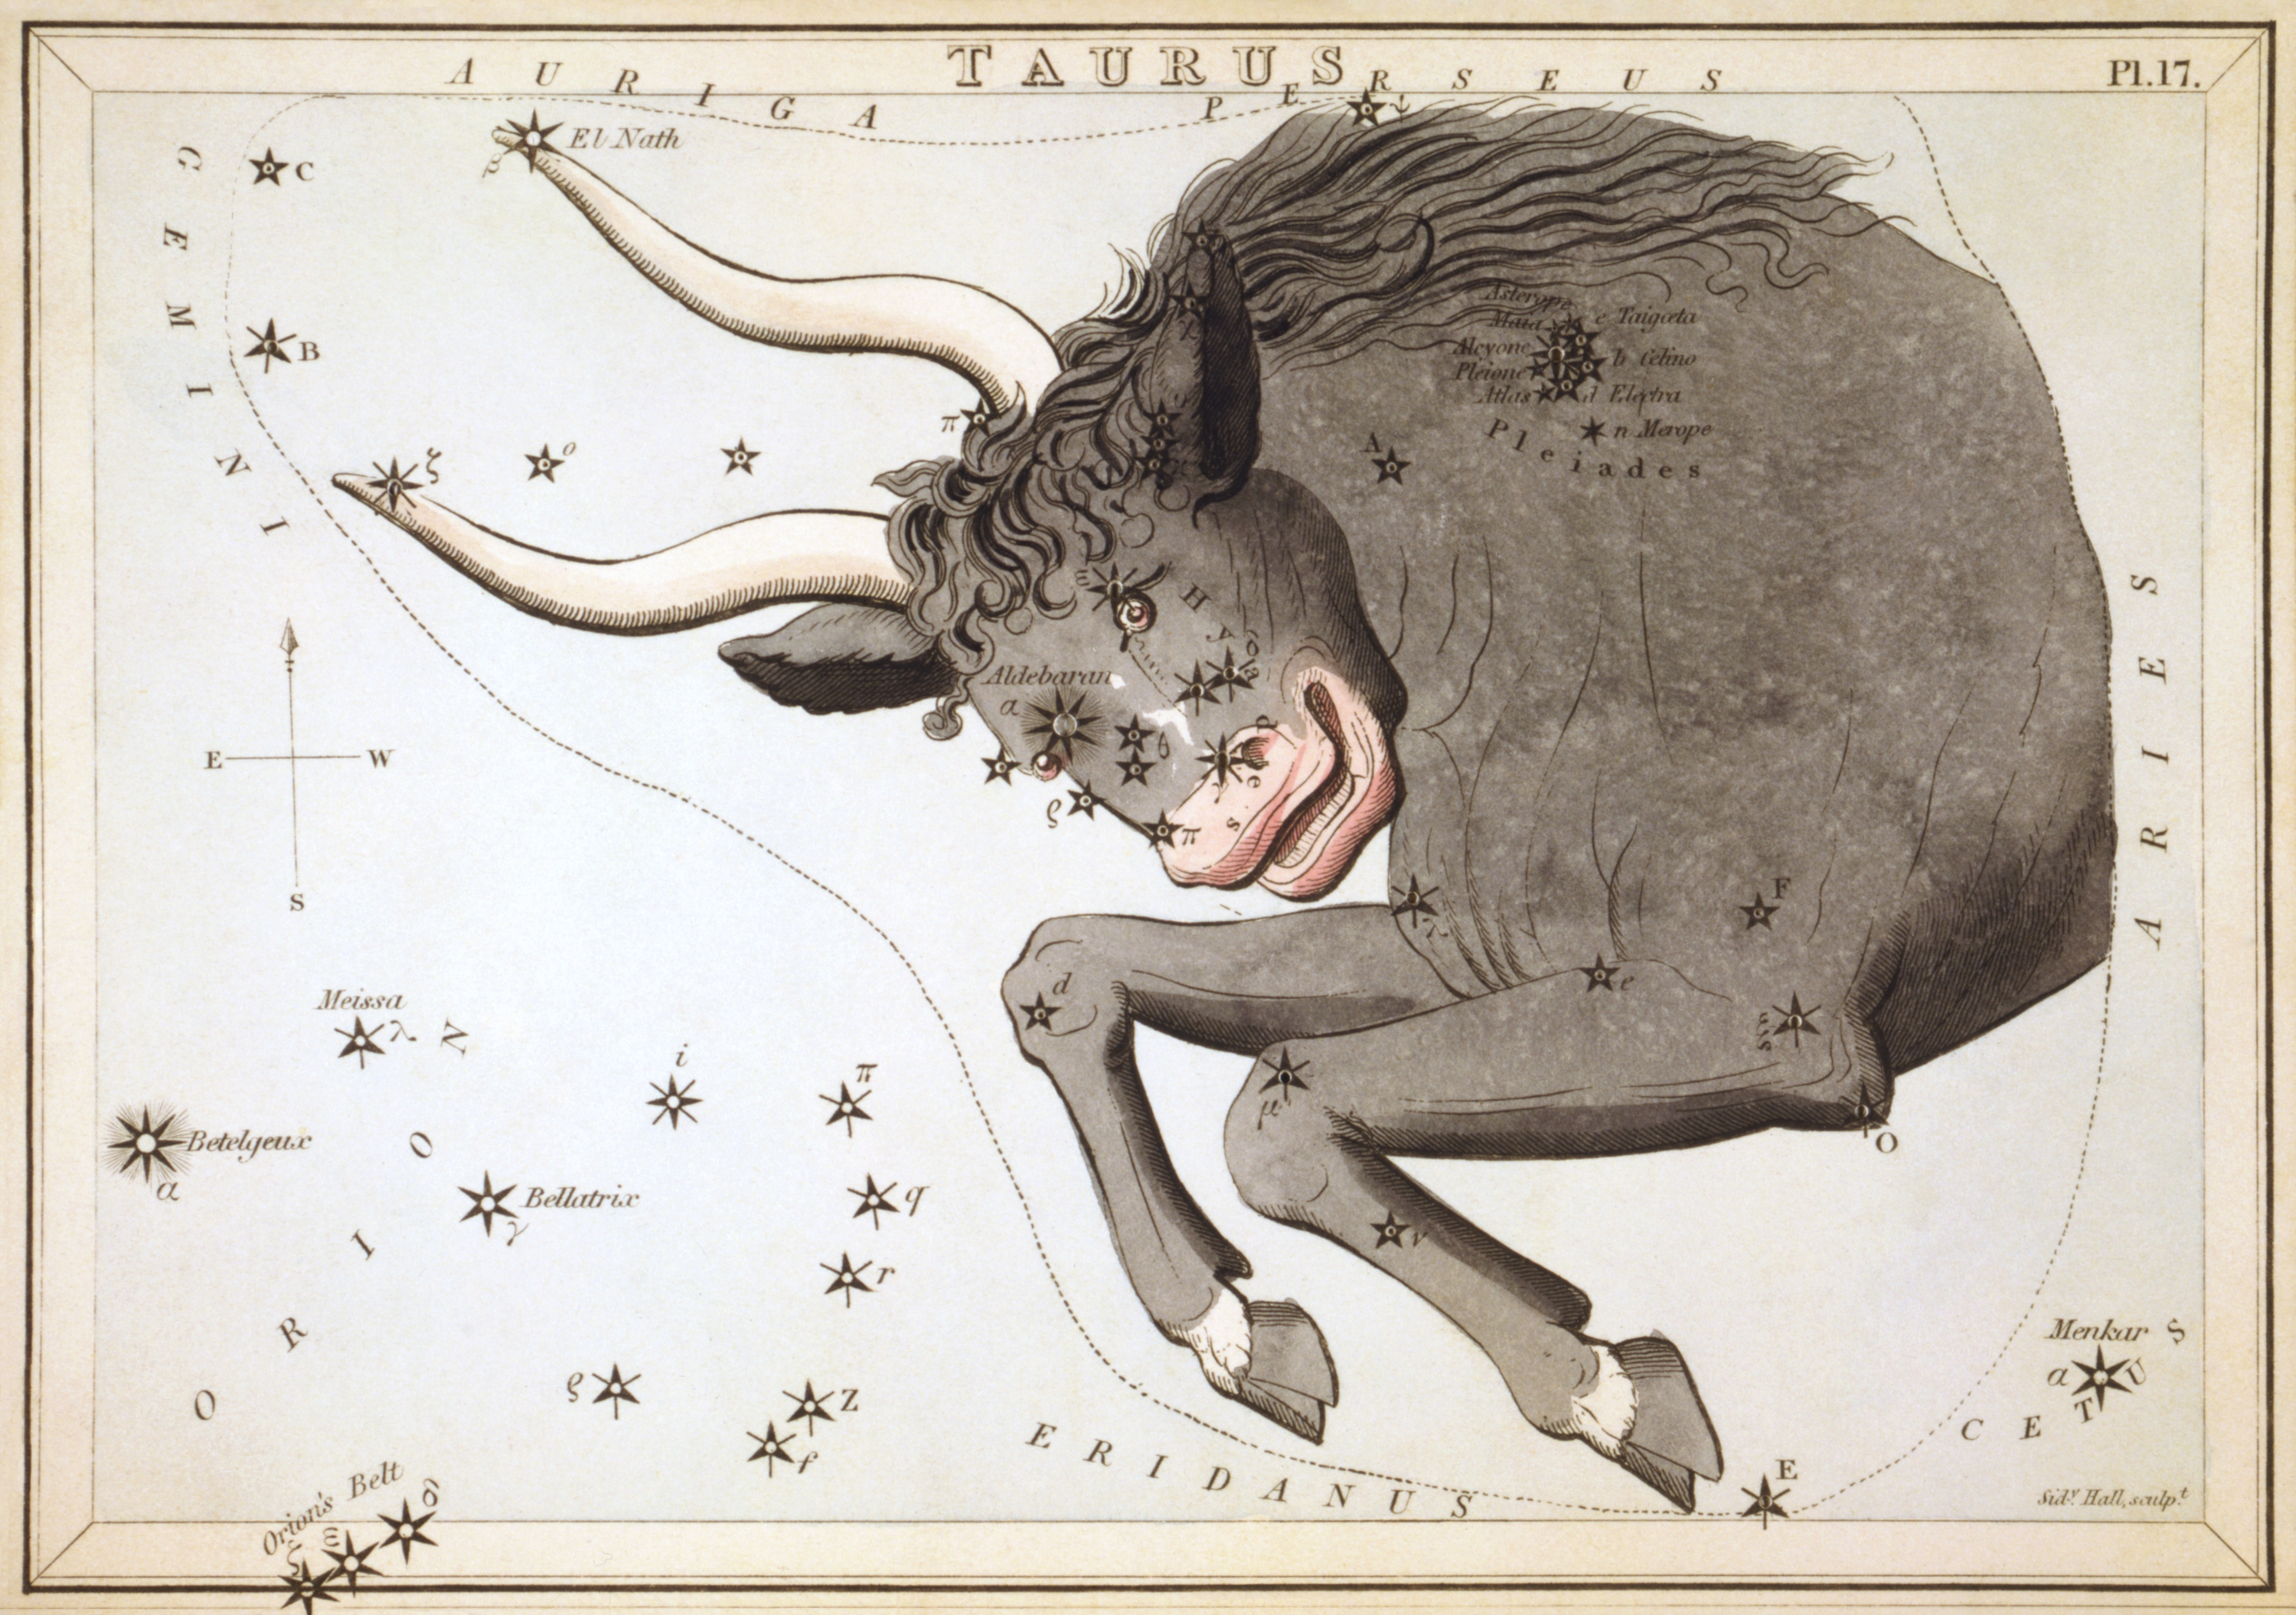 Taurus, the constellation.